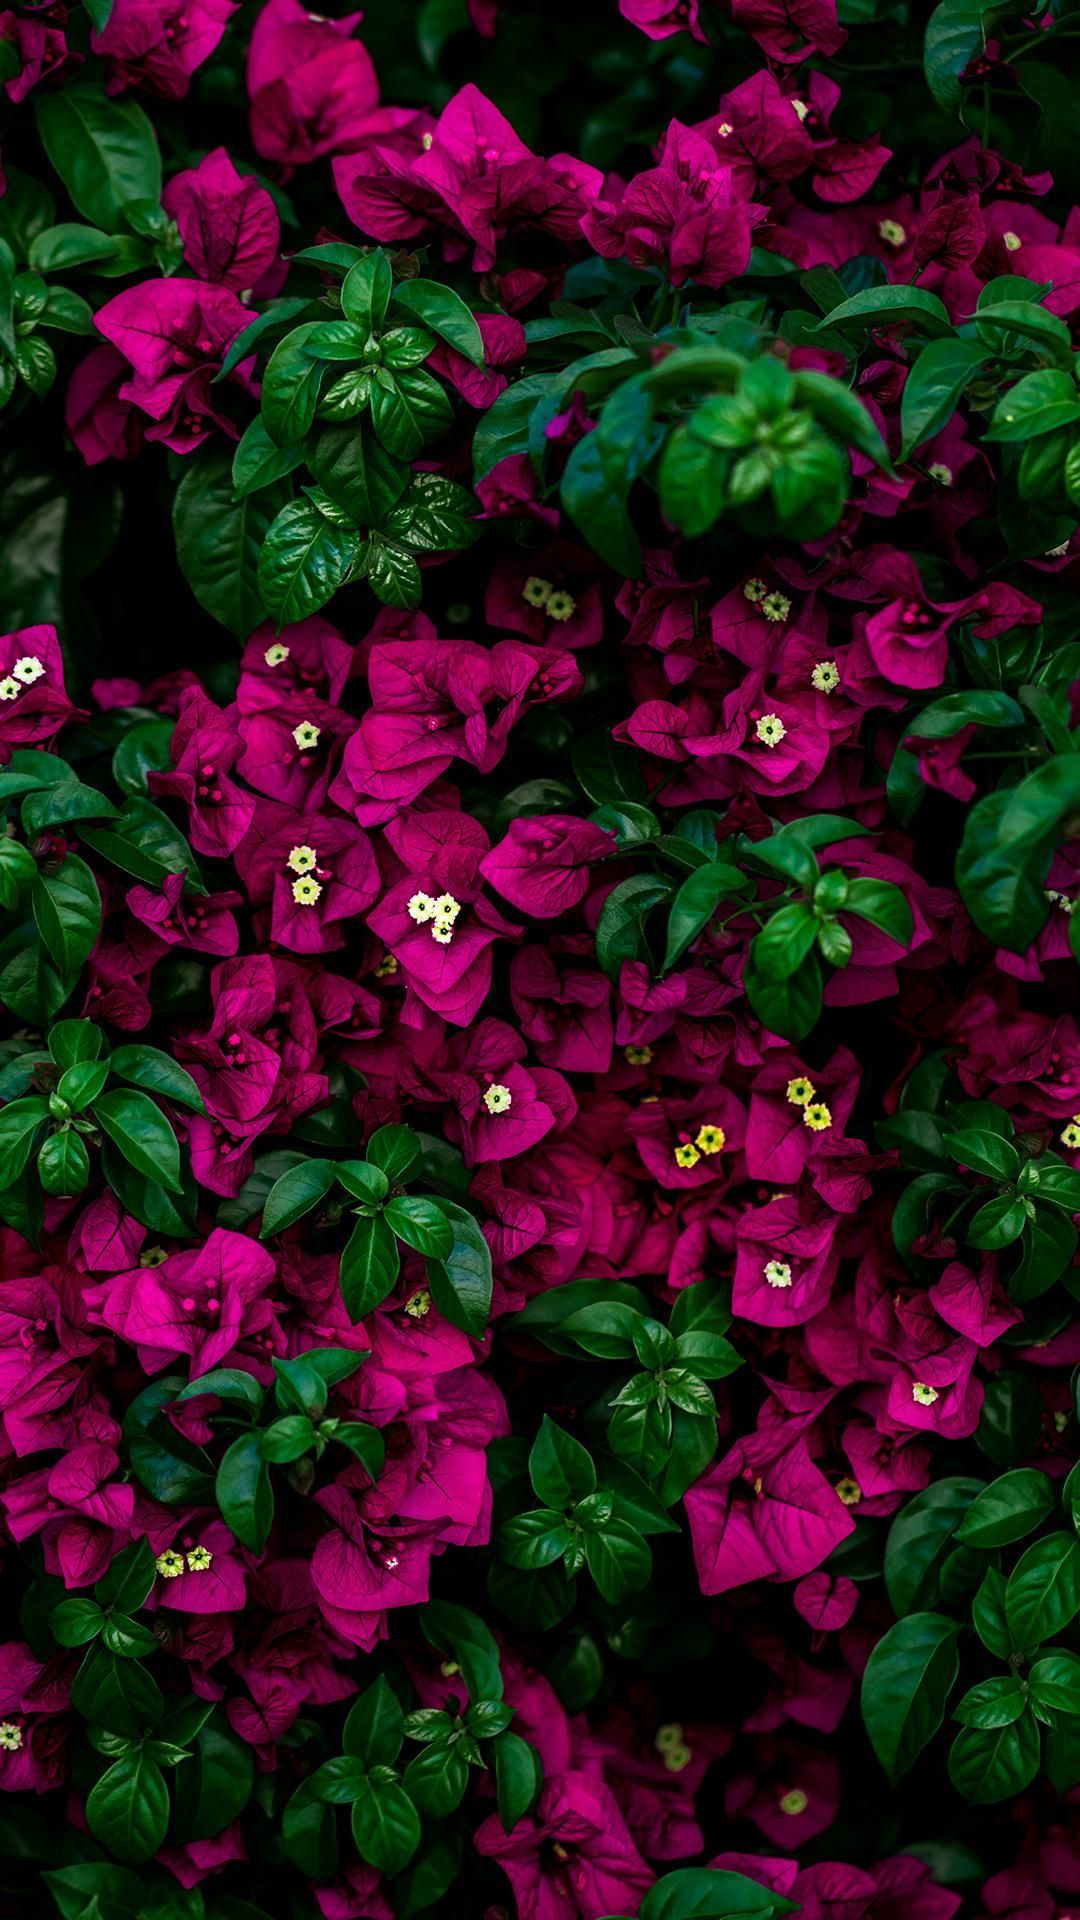 Amoled Wallpaper 38. Flower wallpaper, Nature